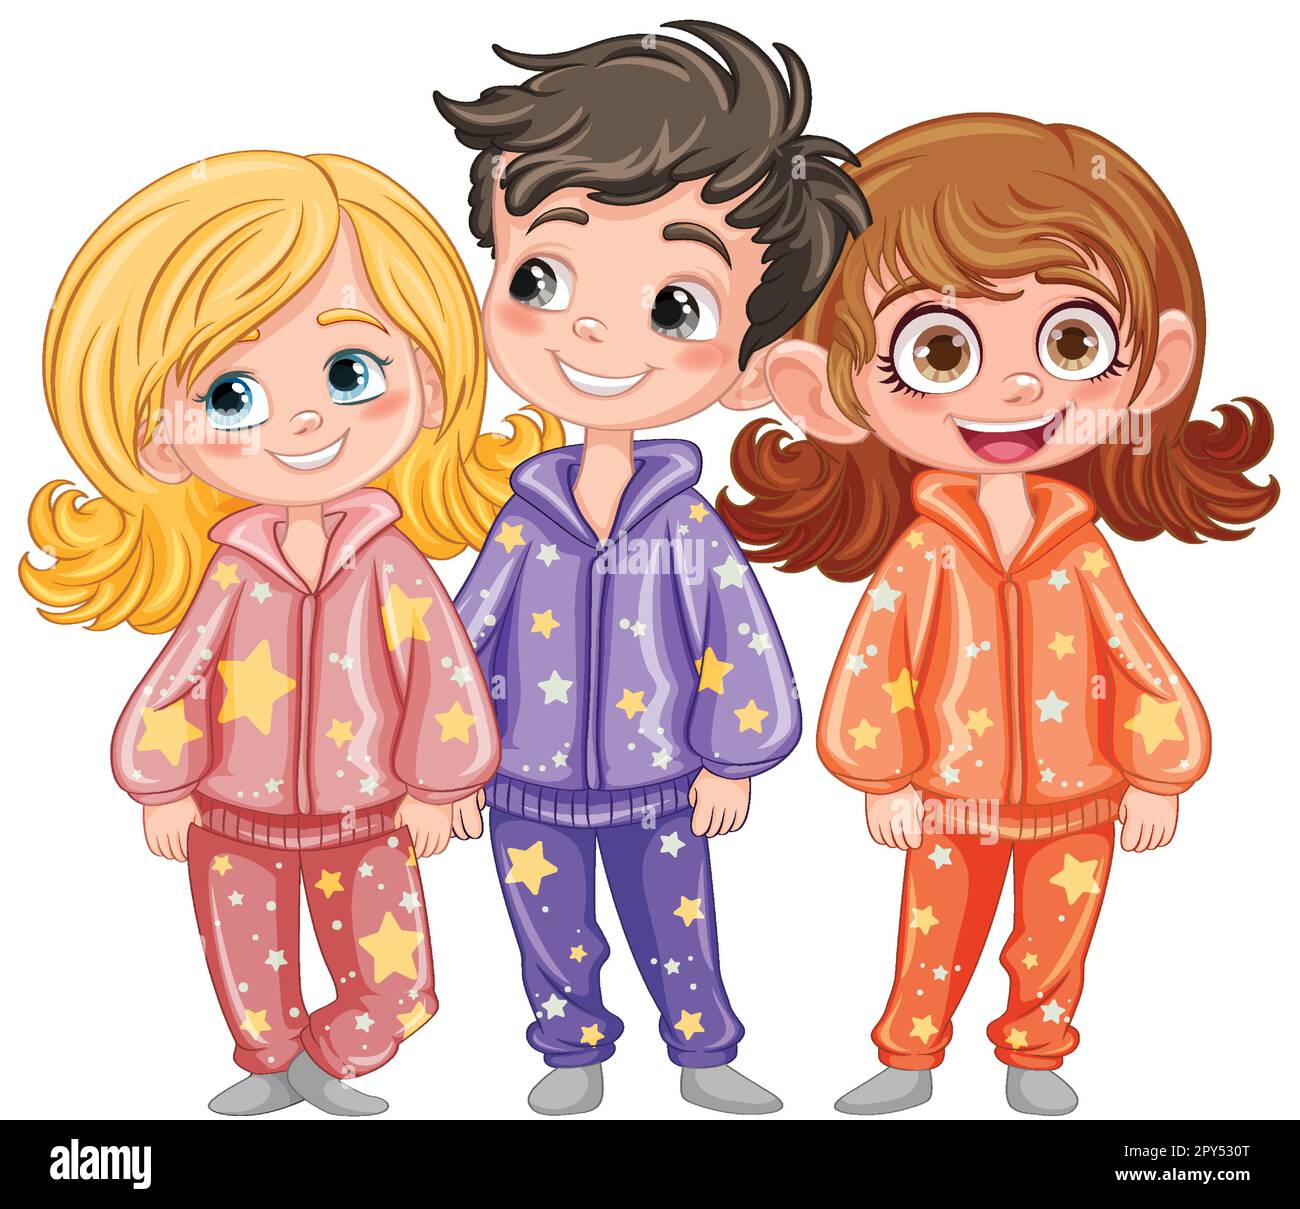 Cute cartoon character in pajamas illustration Stock Vector Image & Art ...